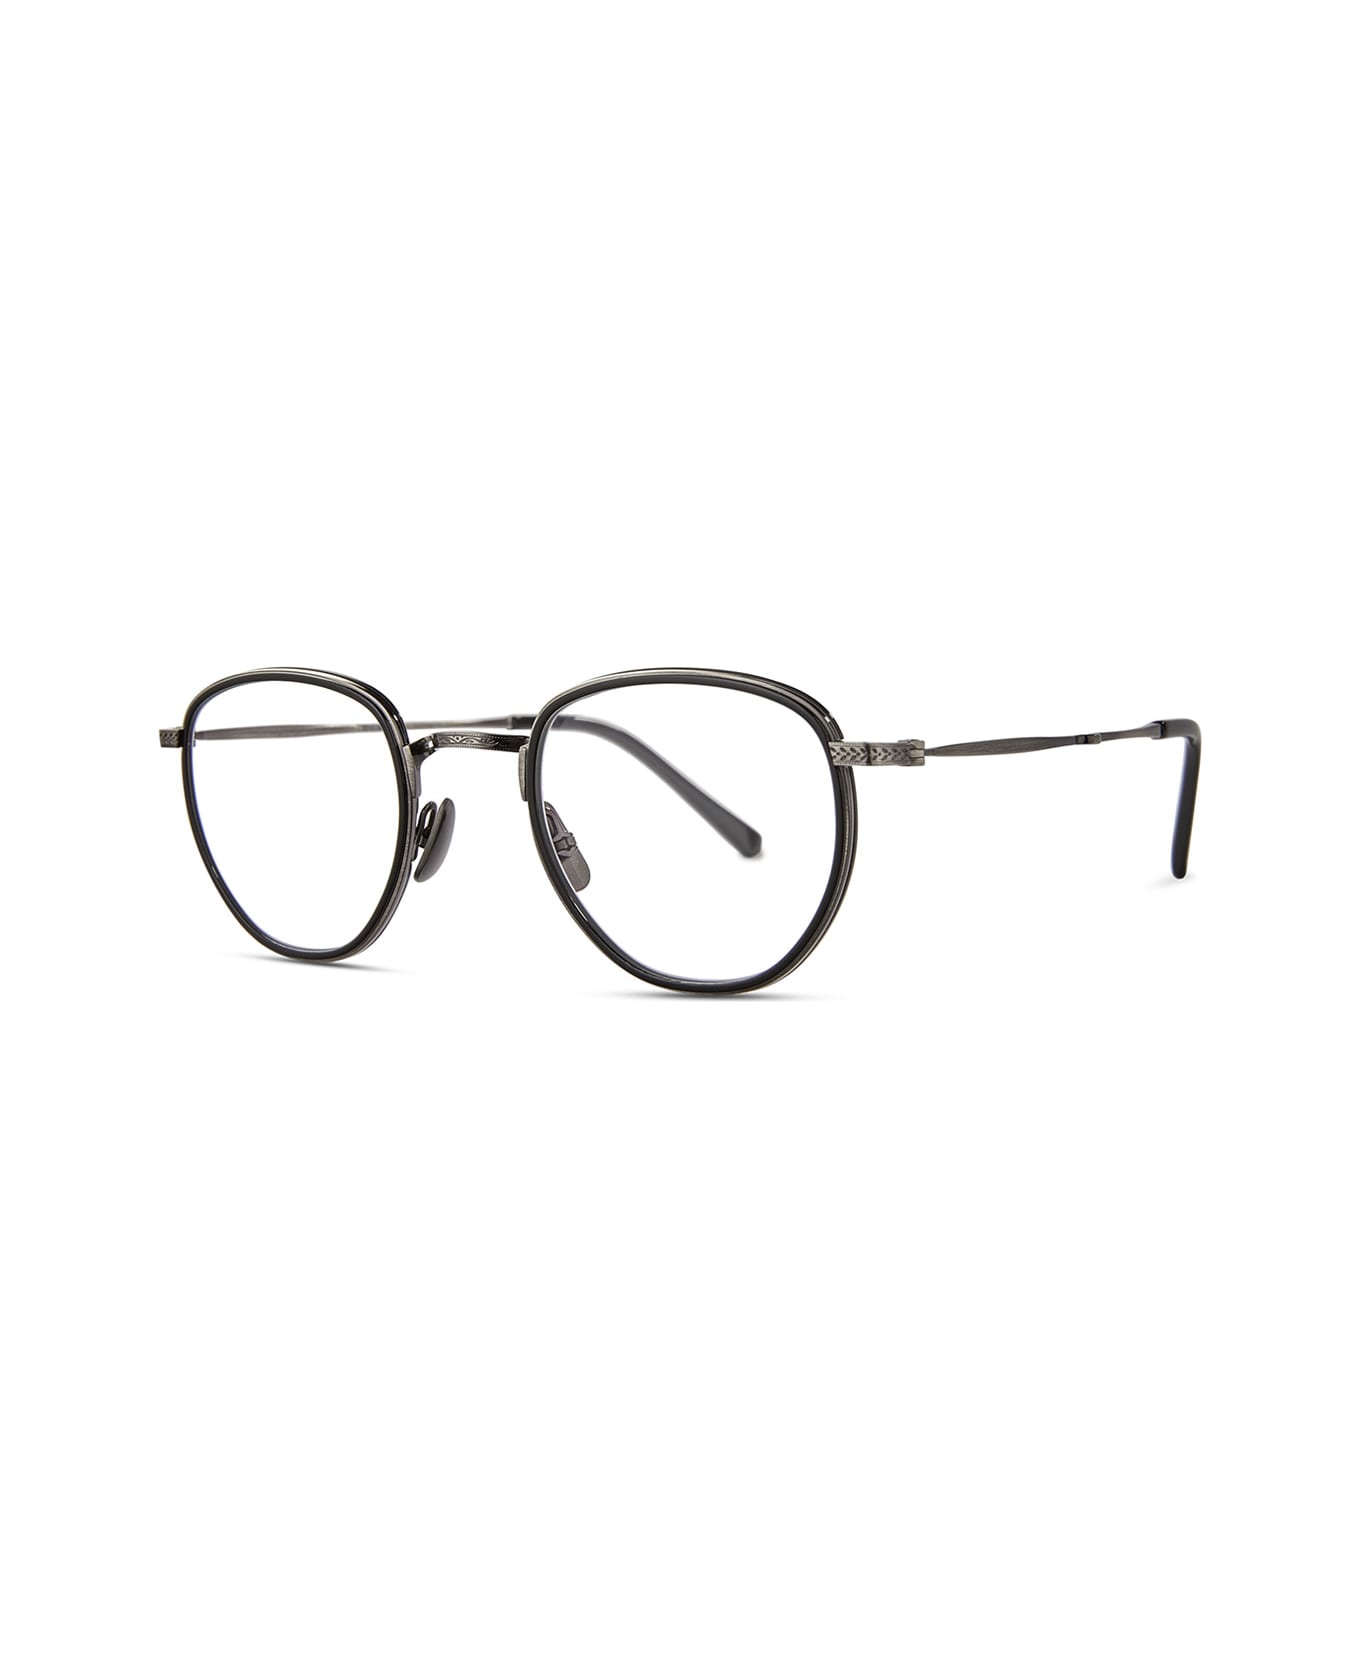 Mr. Leight Roku C Black-pewter Glasses - Black-Pewter